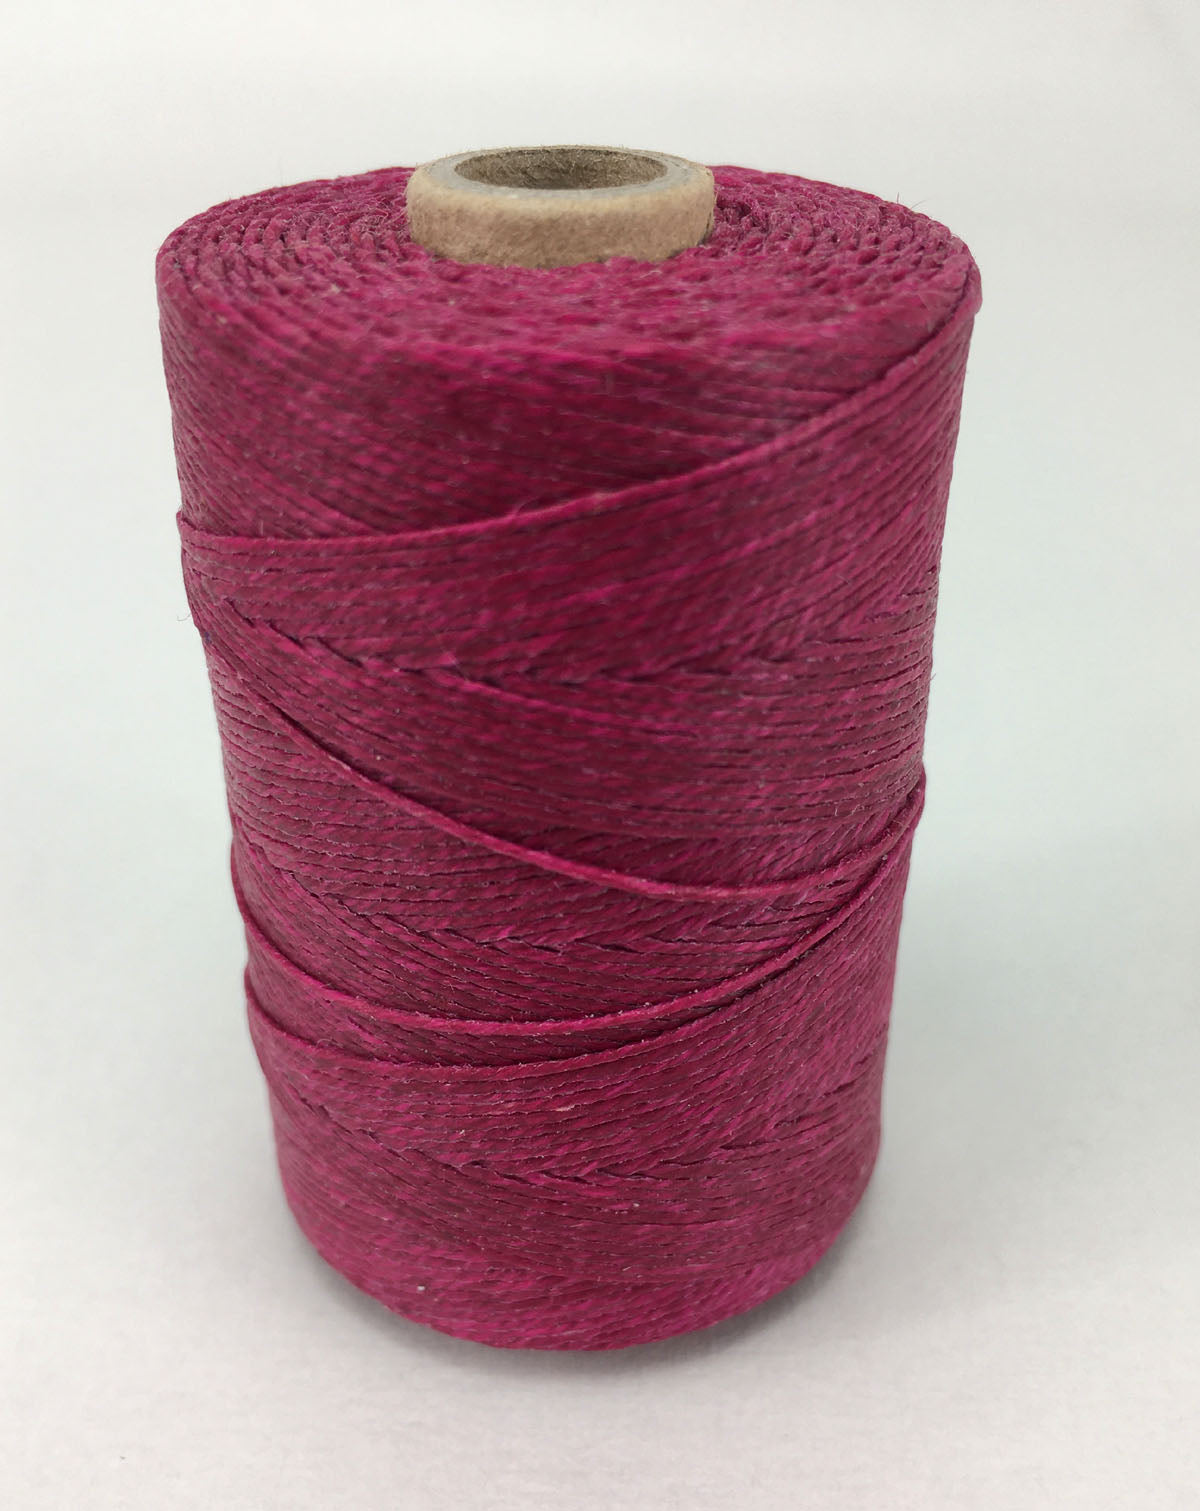 Alizarin- Per spool 50g- 100% Pure Linen Thread- Waxed- 18/3 No.18 Cord 3- Approx 0.55mm thick